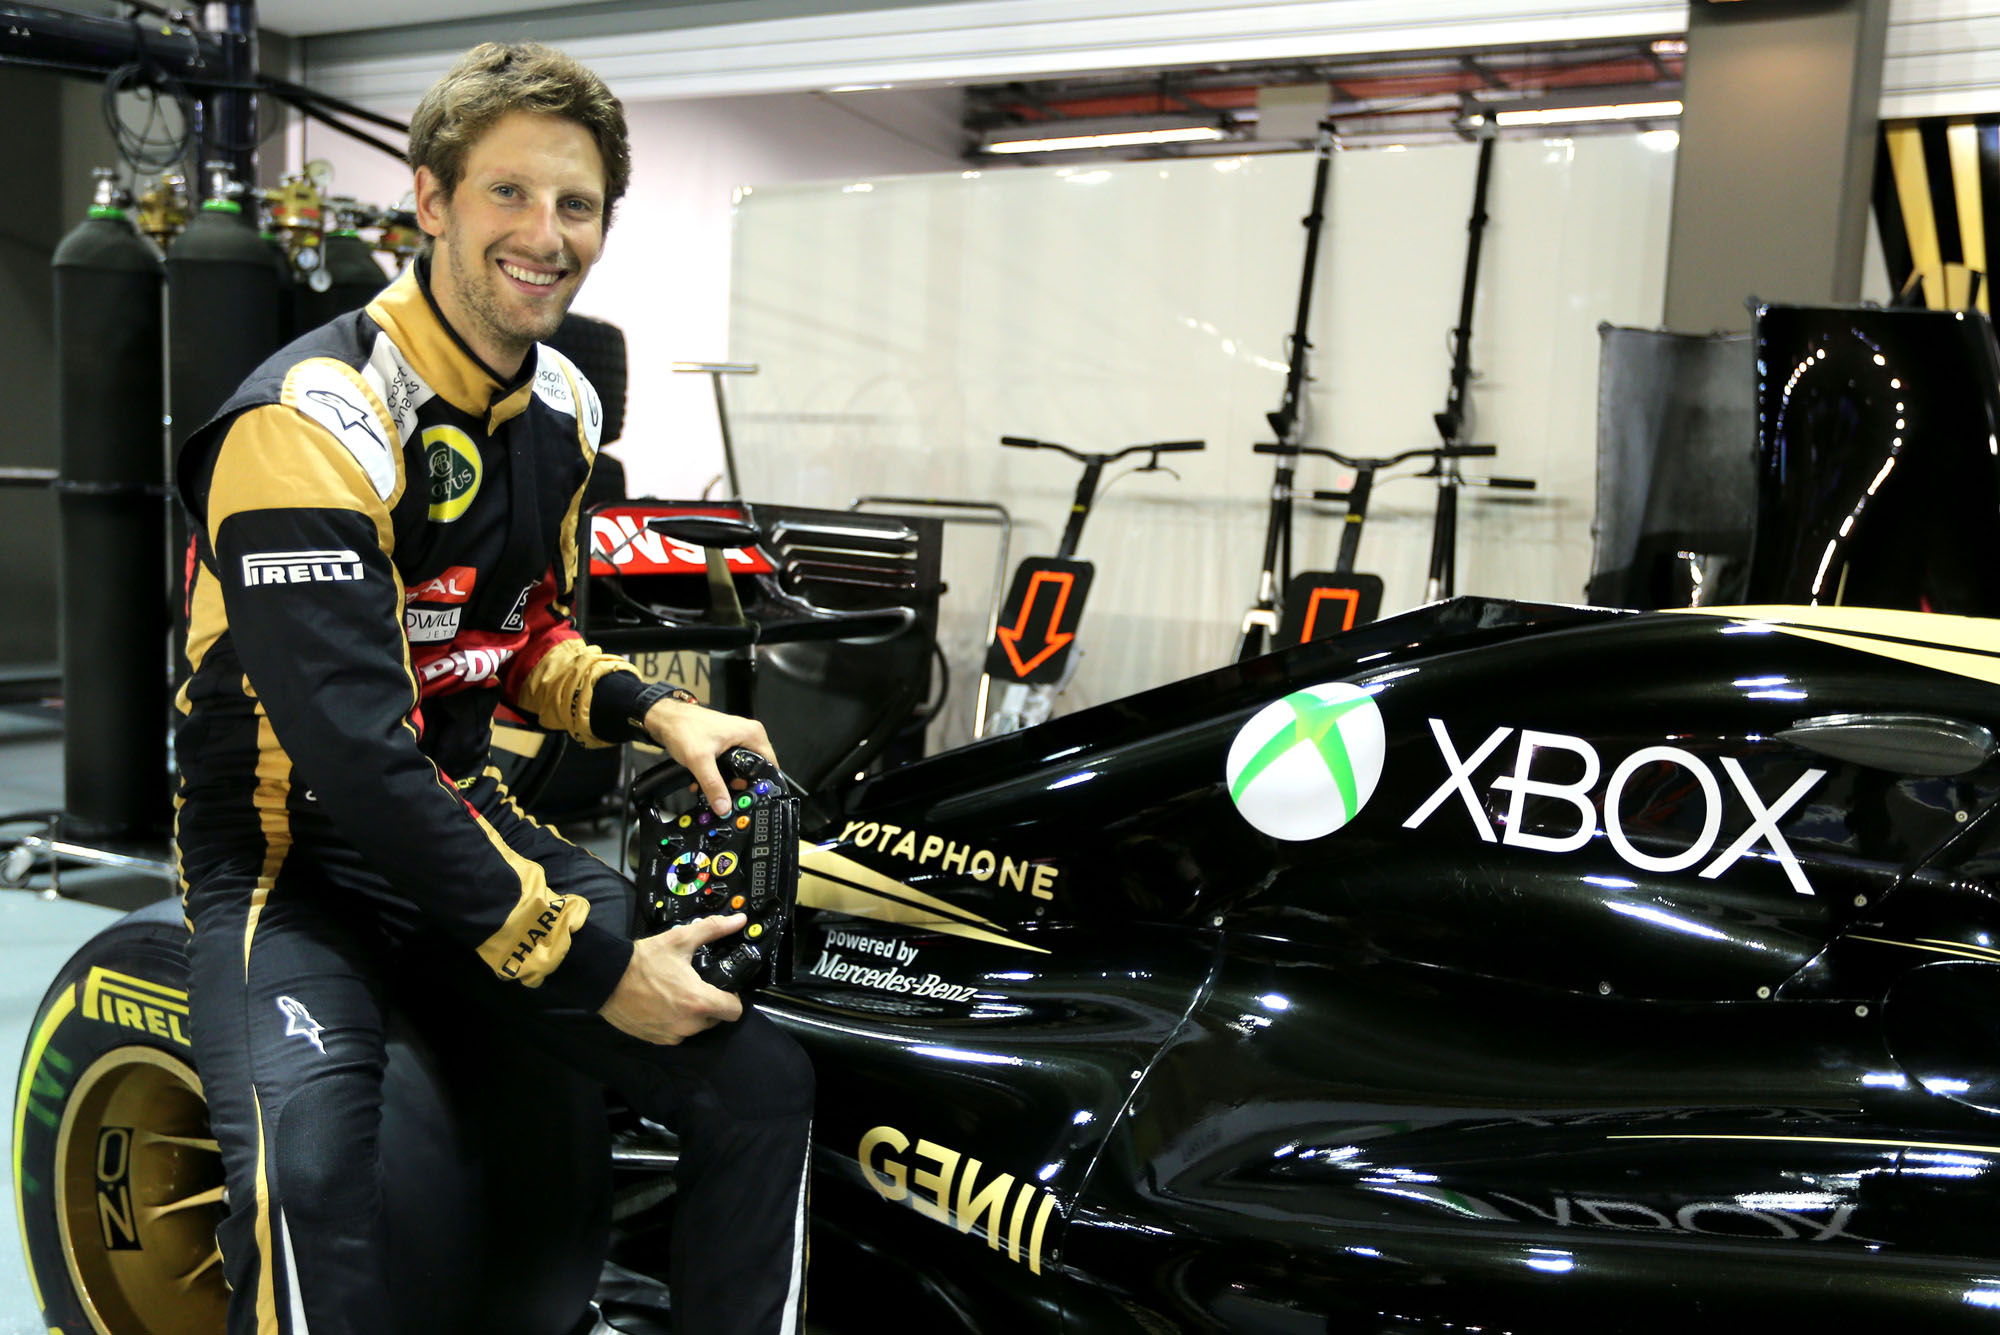 Lotus F1 Team Driver Romain Grosjean with his Xbox-branded E23 Hybrid